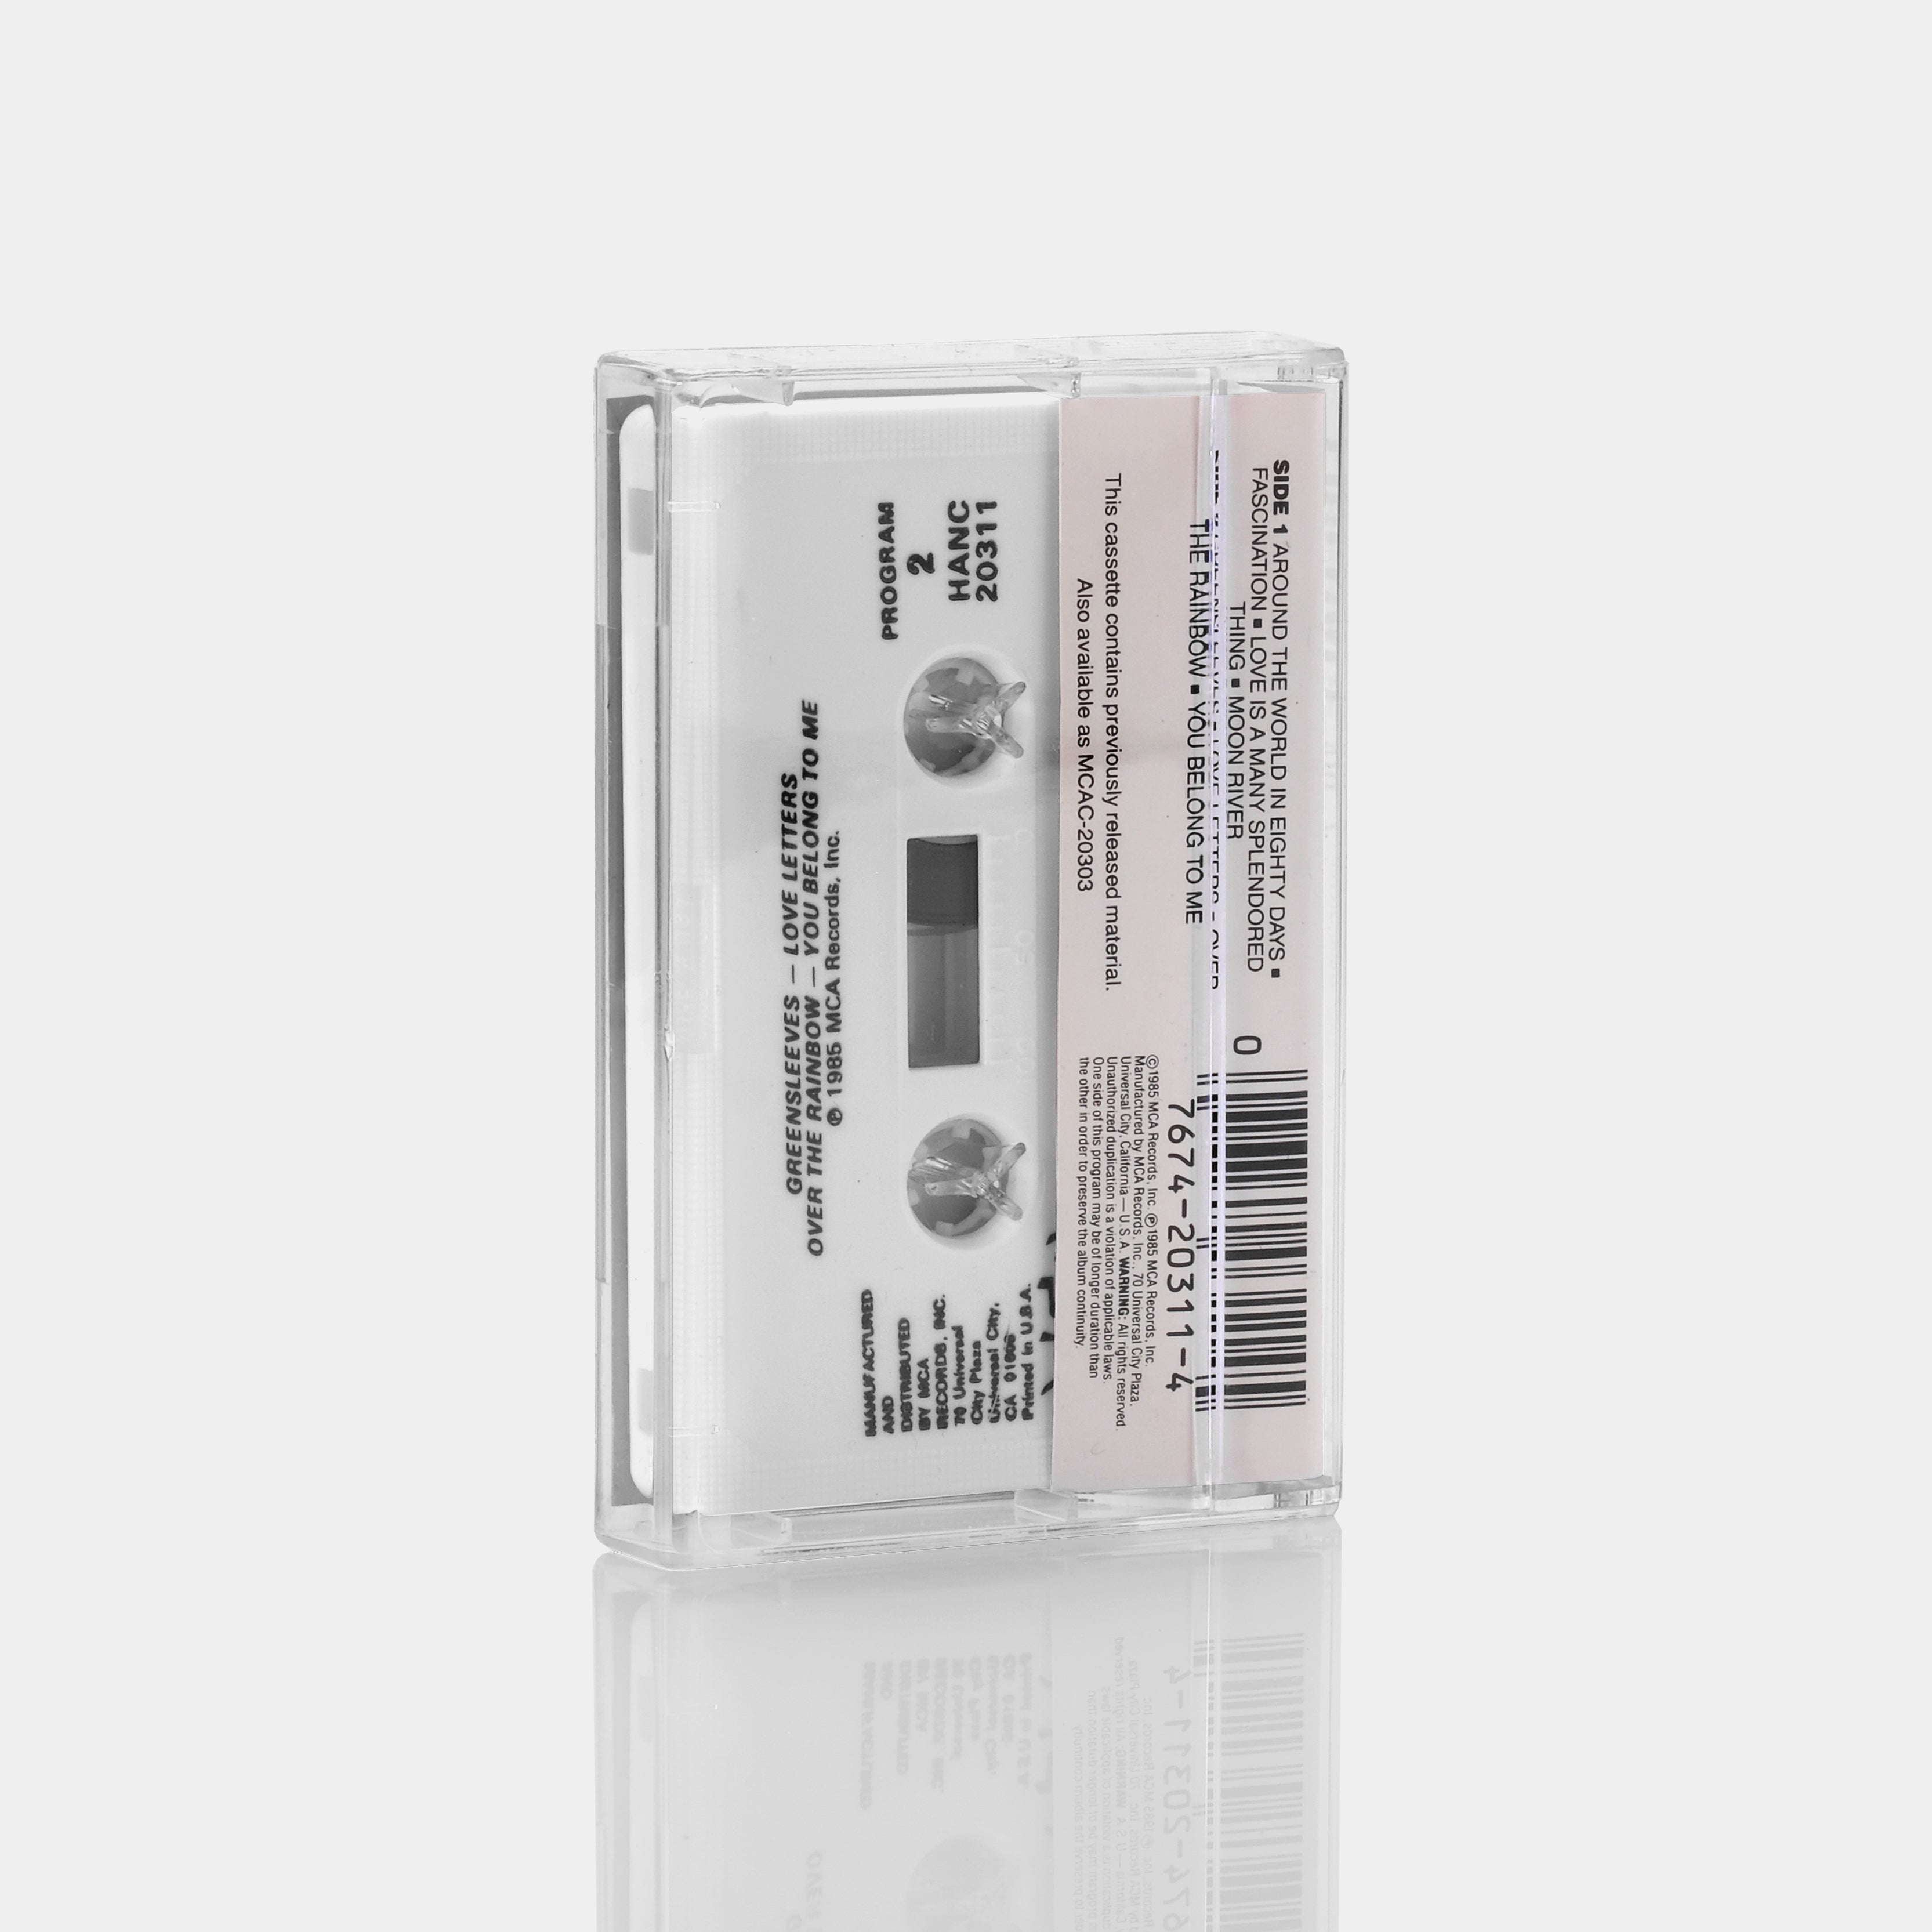 Liberace - The Best Of Liberace Vol. 2 Cassette Tape